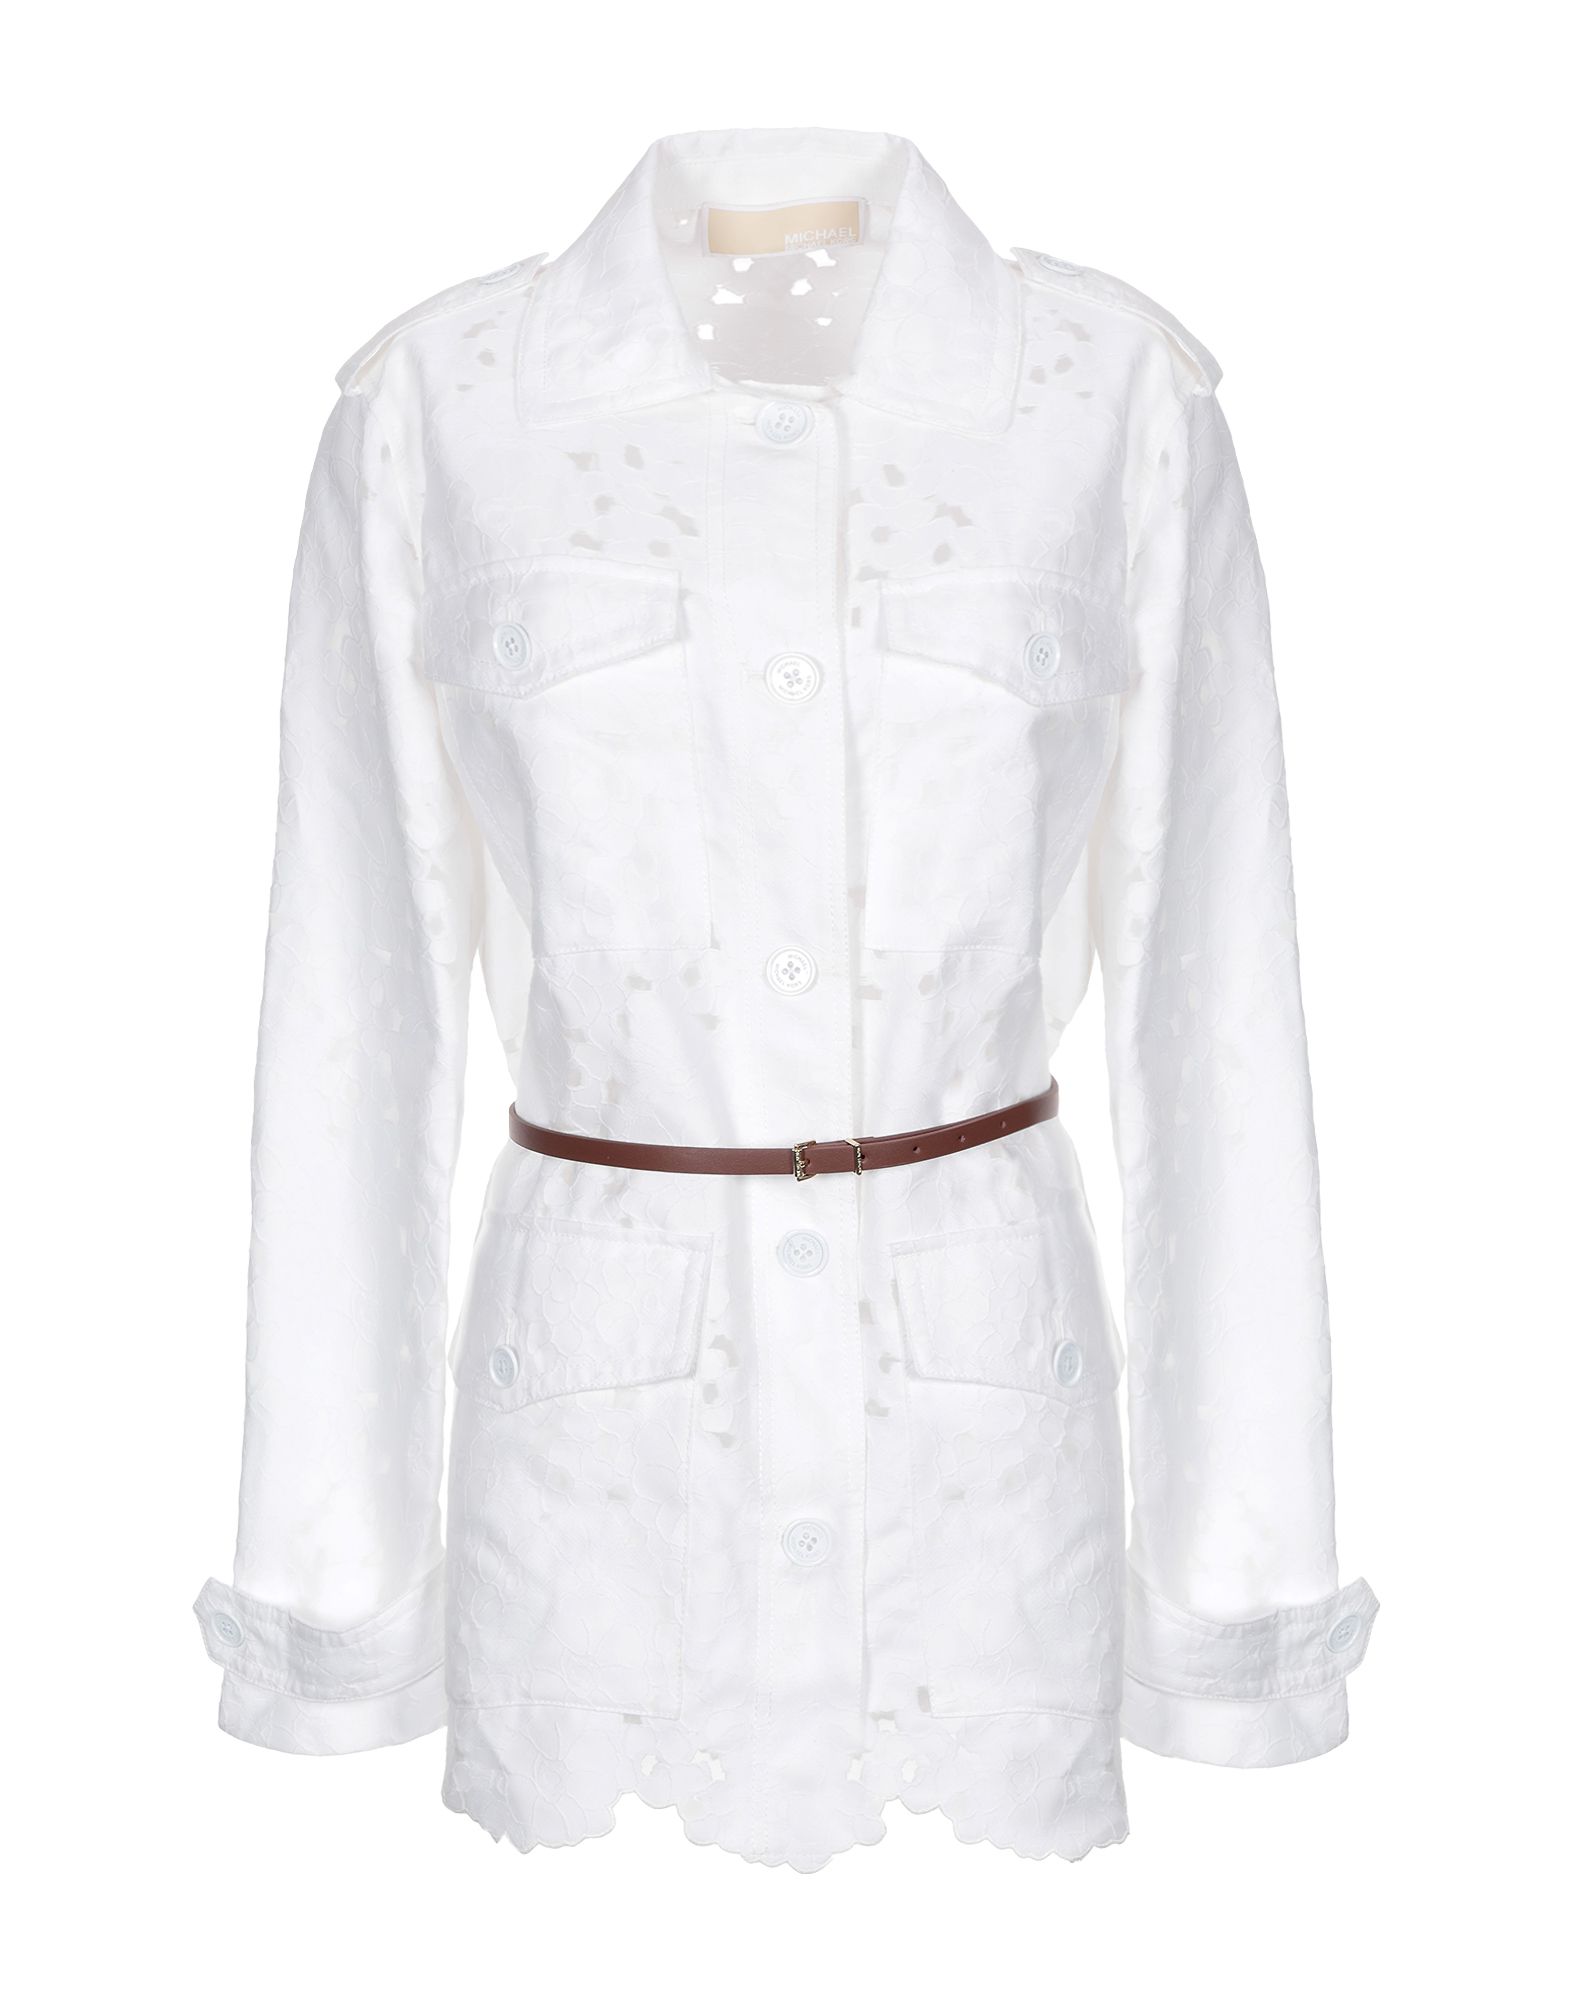 michael kors jacket white